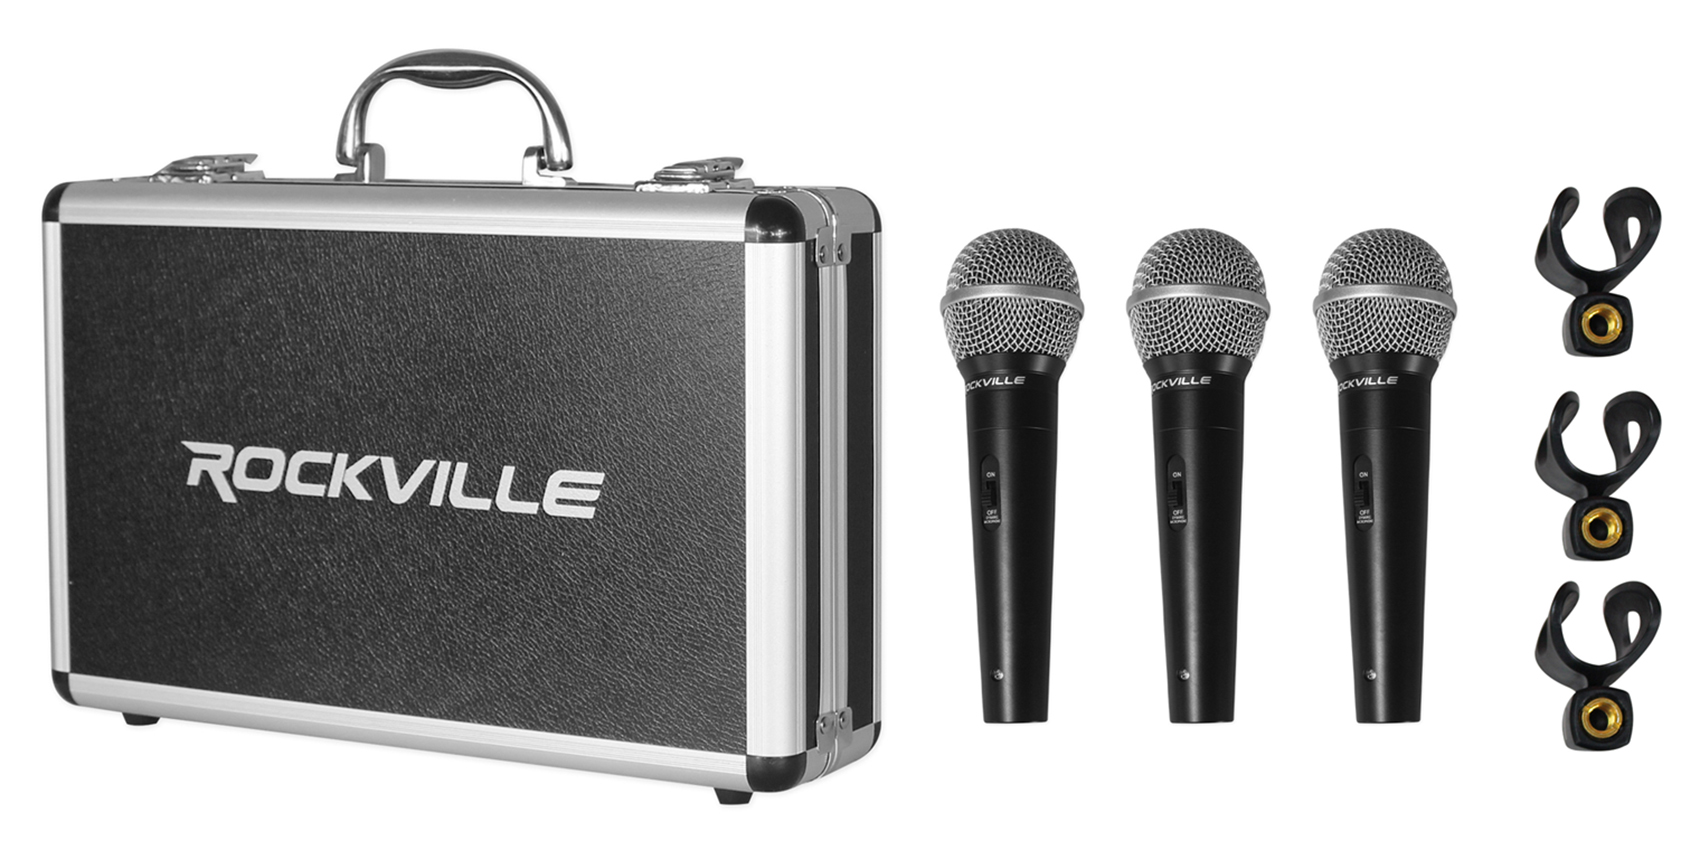 Rockville RMC-3PK 3 Pack Metal Wired Vocal/Instrument/DJ Microphones